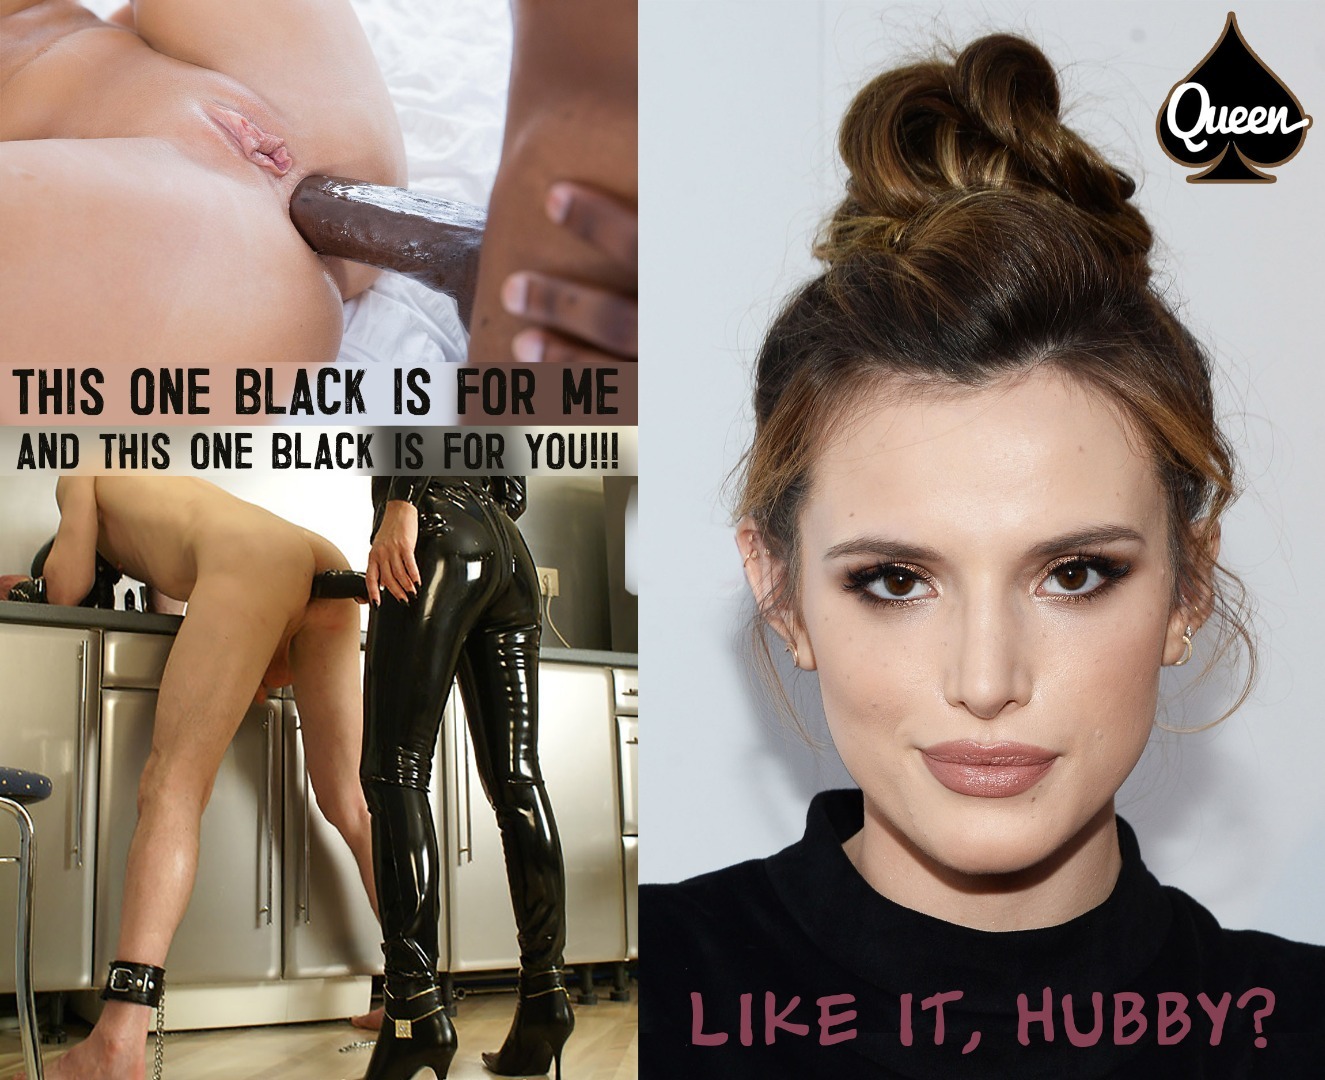 monique fuentes porn videos free movies #sexslave #mistress #femdom #ass #caption #lock #beautiful #anal #chastity #cassiedelisla